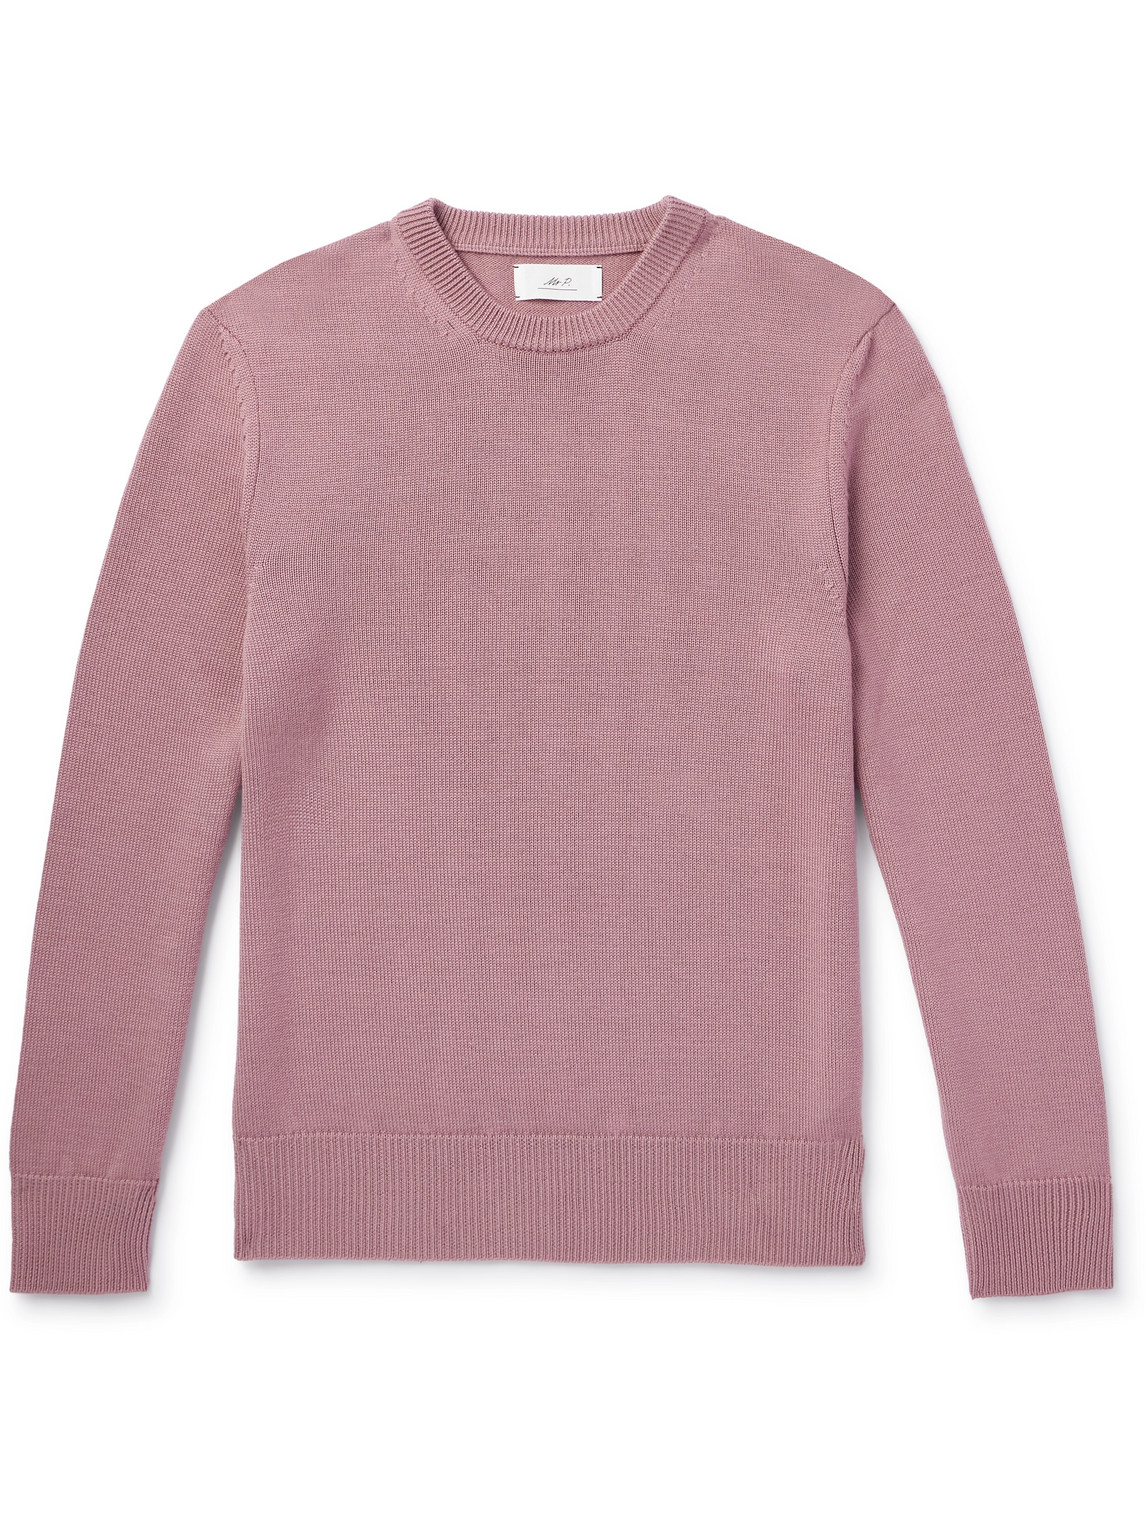 Mr P Golf Merino Wool Sweater In Pink